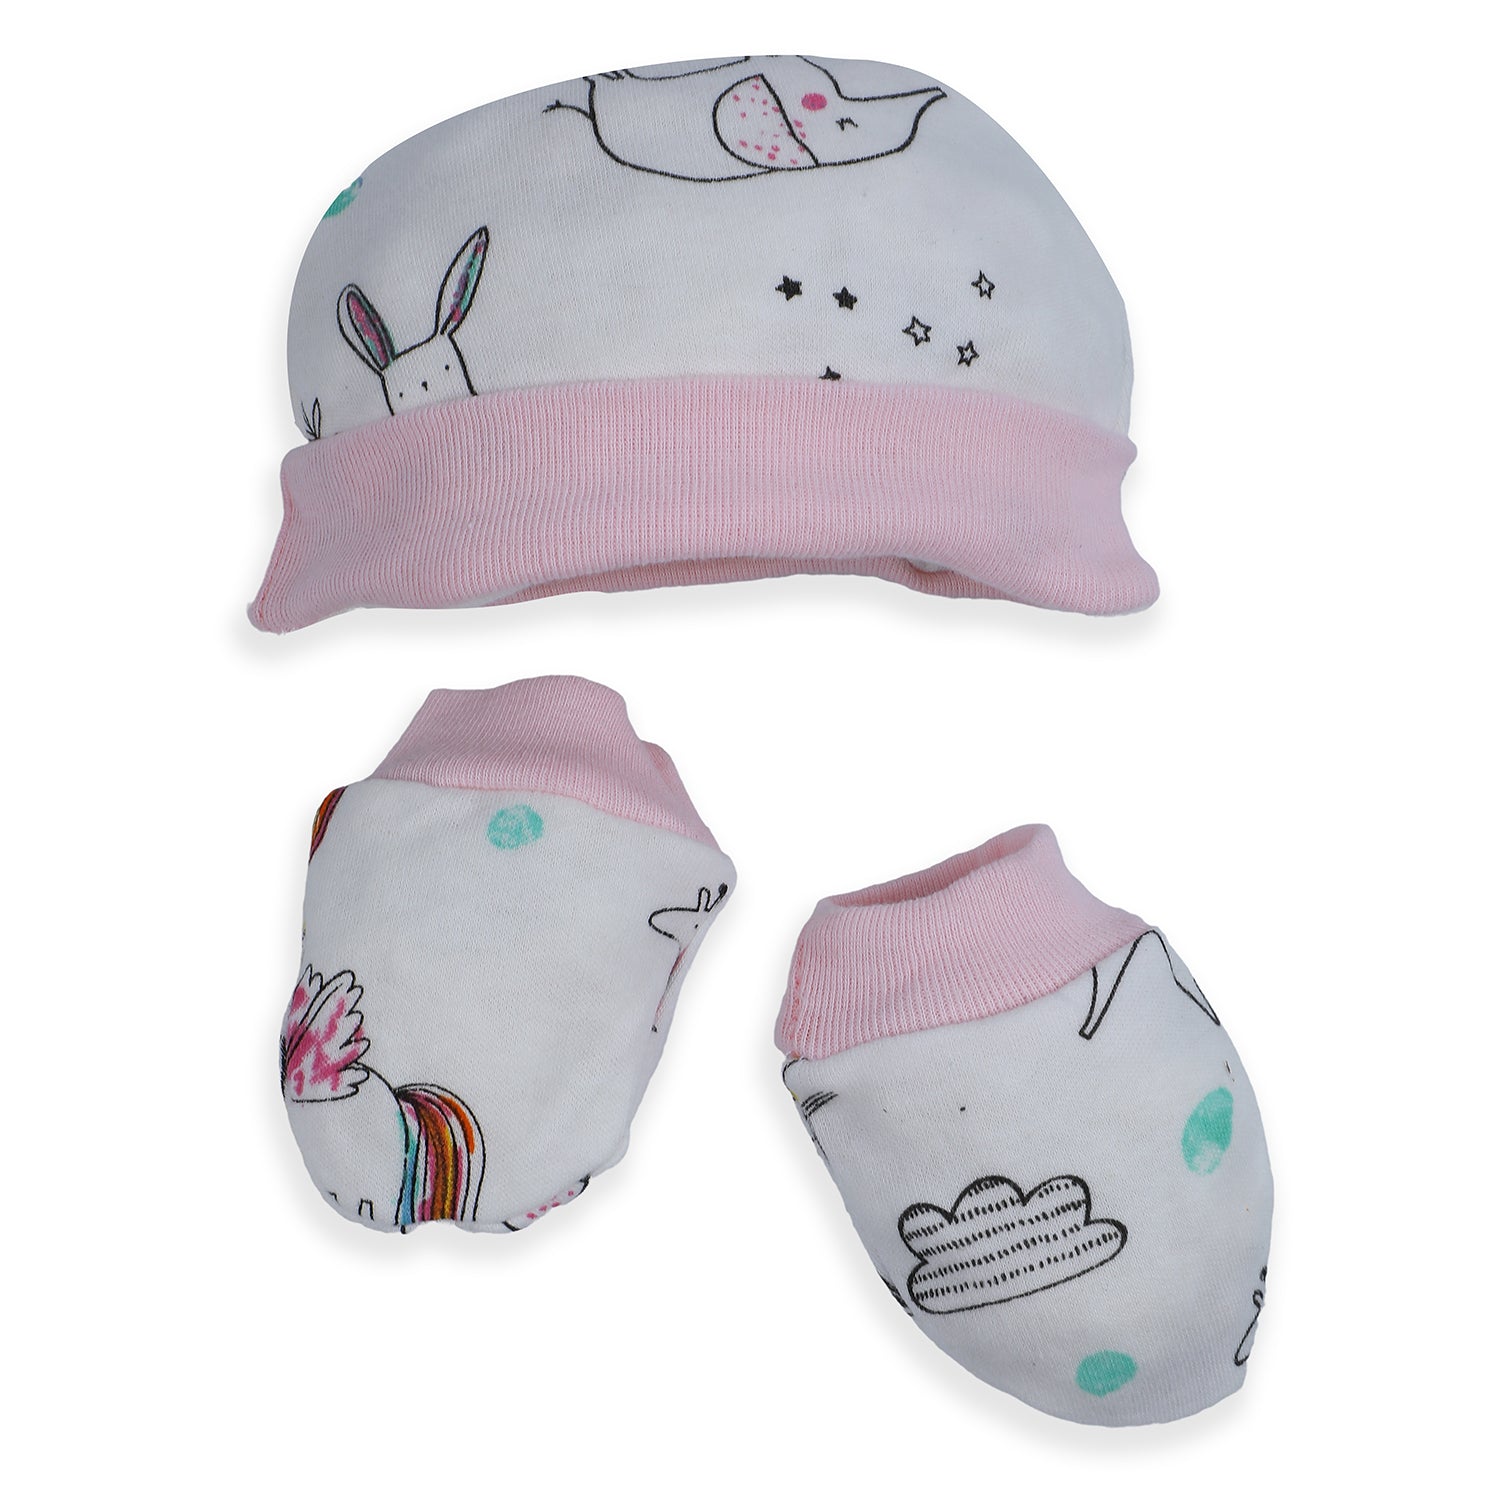 Baby Moo Unicorn Rainbow Infant Essentials 5 pcs Romper Gift Set - Pink - Baby Moo